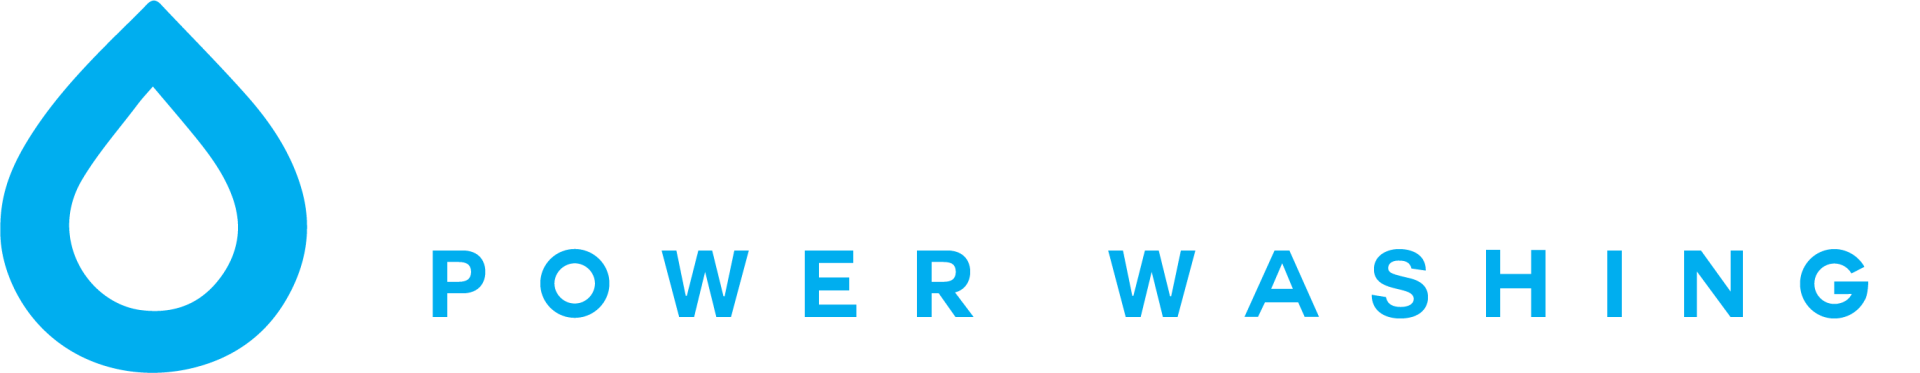 Waterly, Co. Power Washing - LOGO